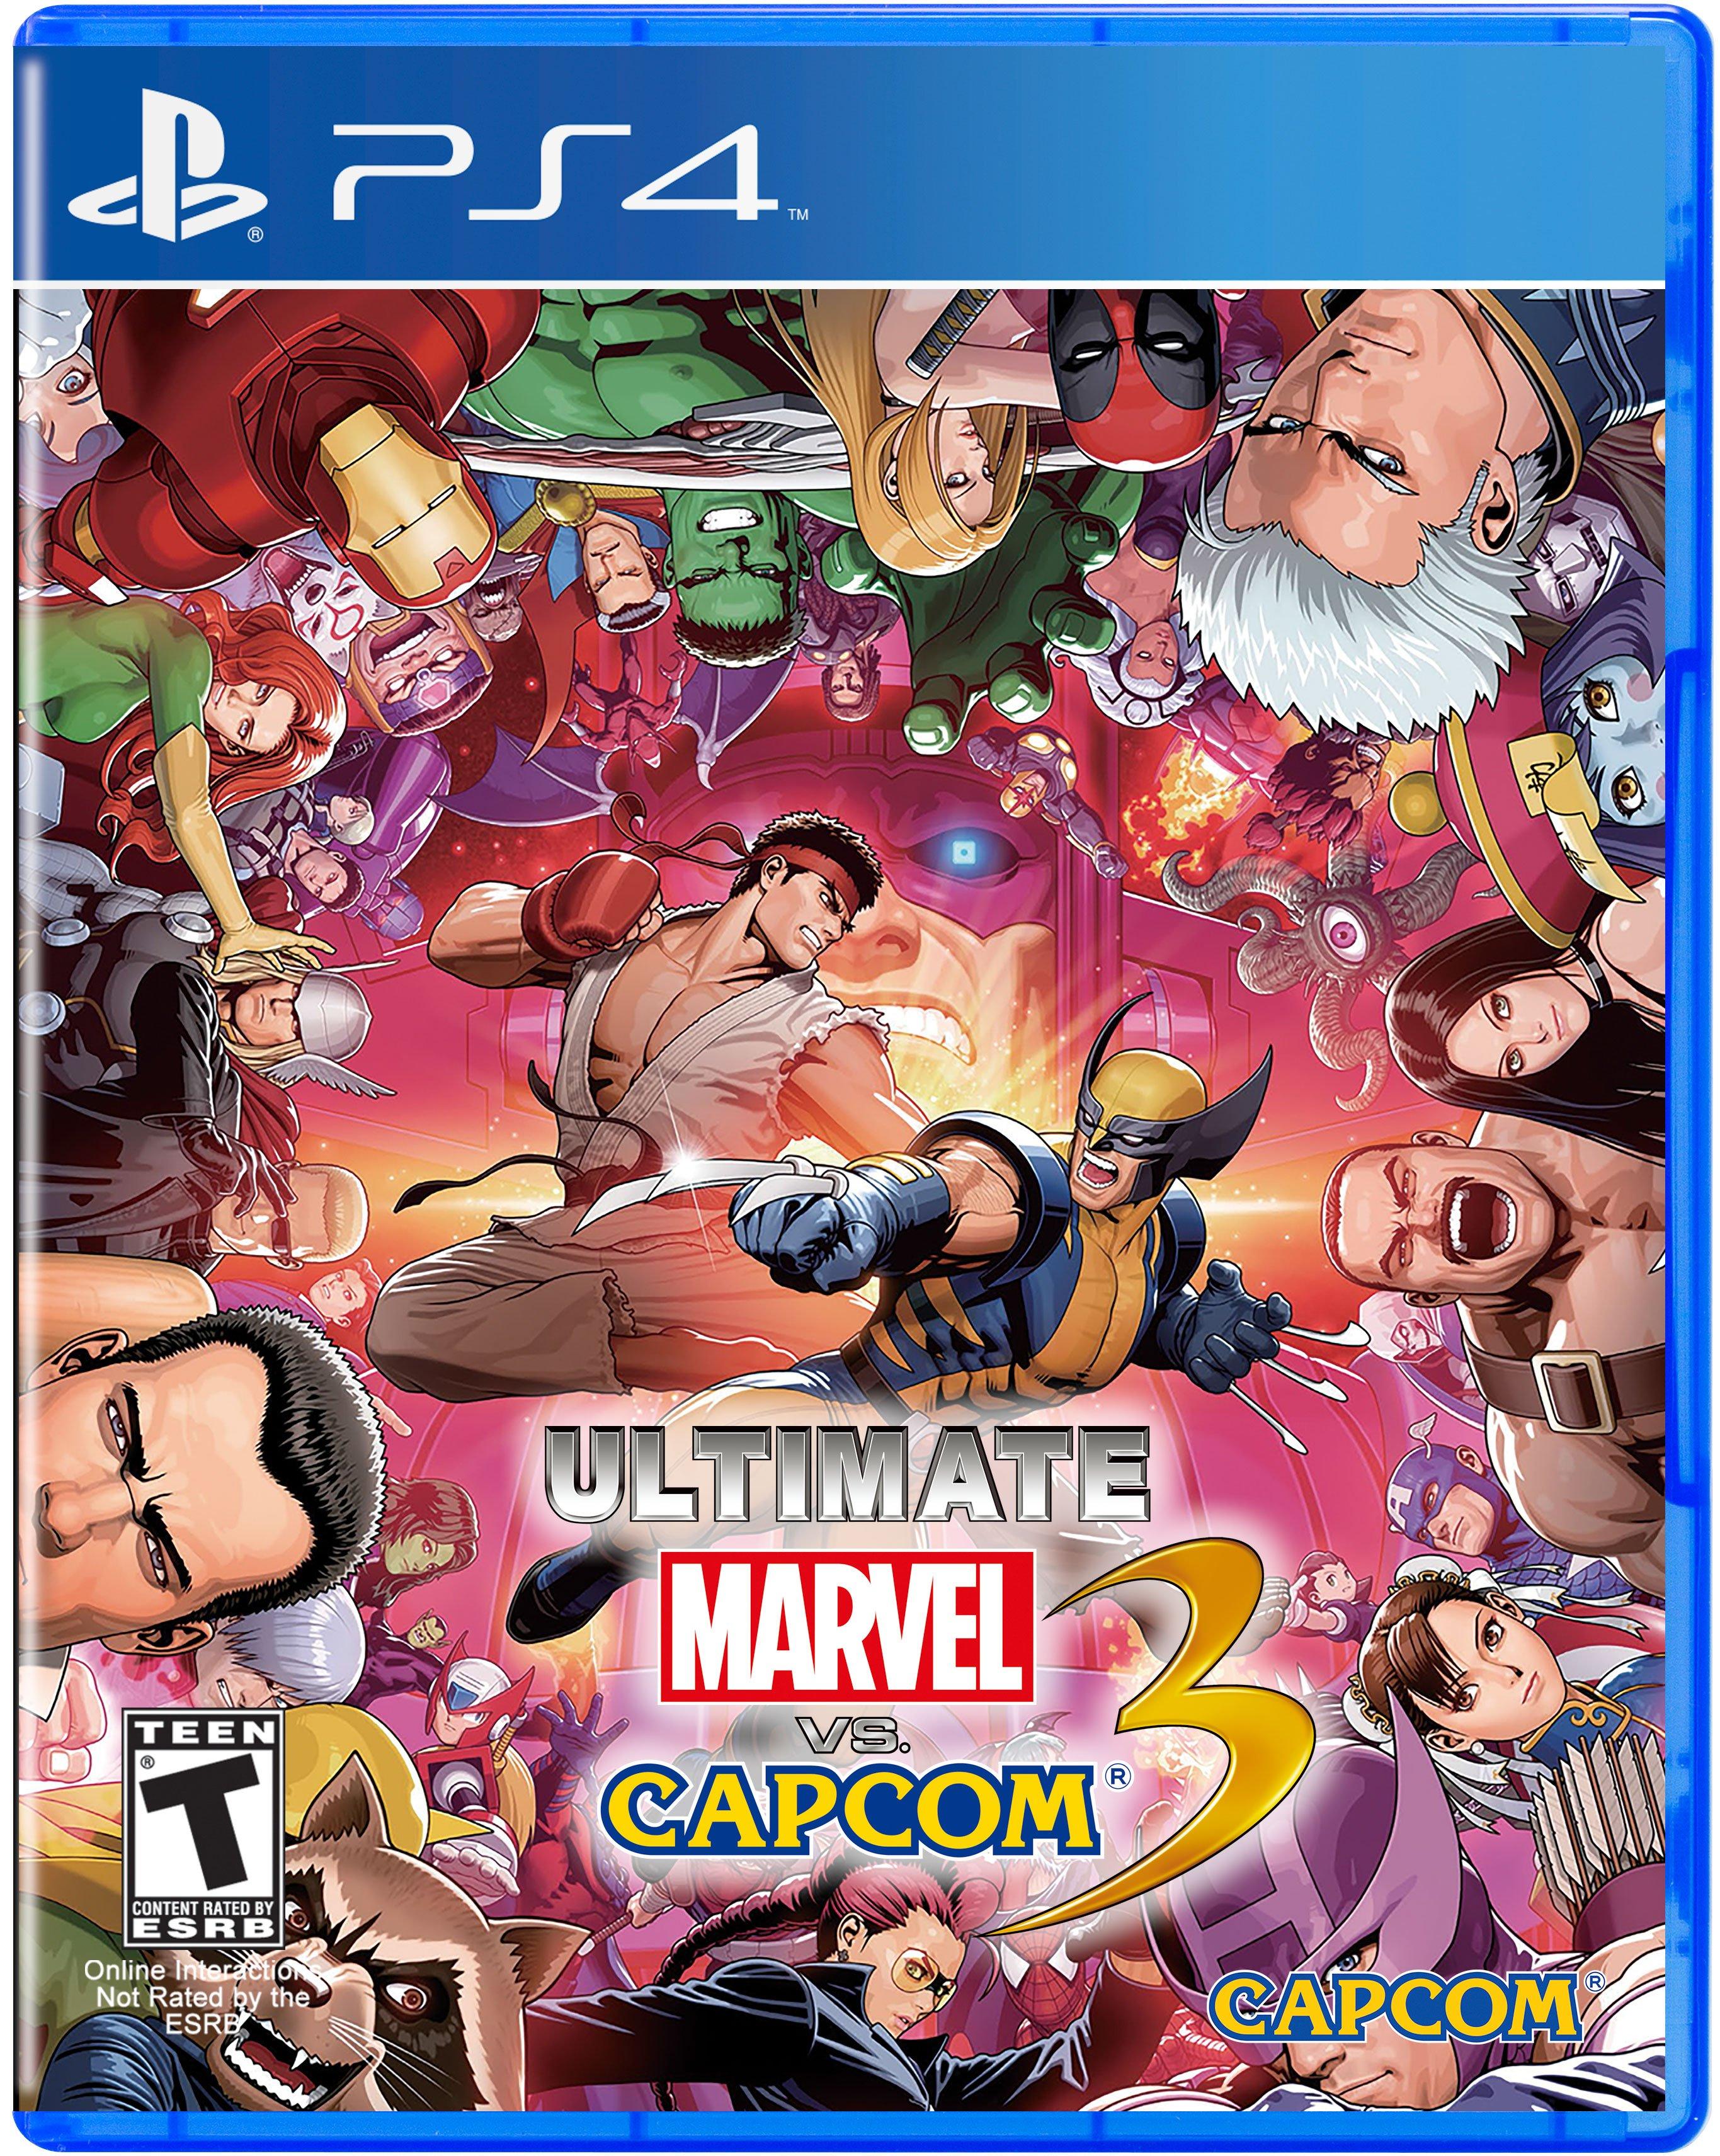 Ultimate-Marvel-vs-Capcom-3-Only-at-GameStop